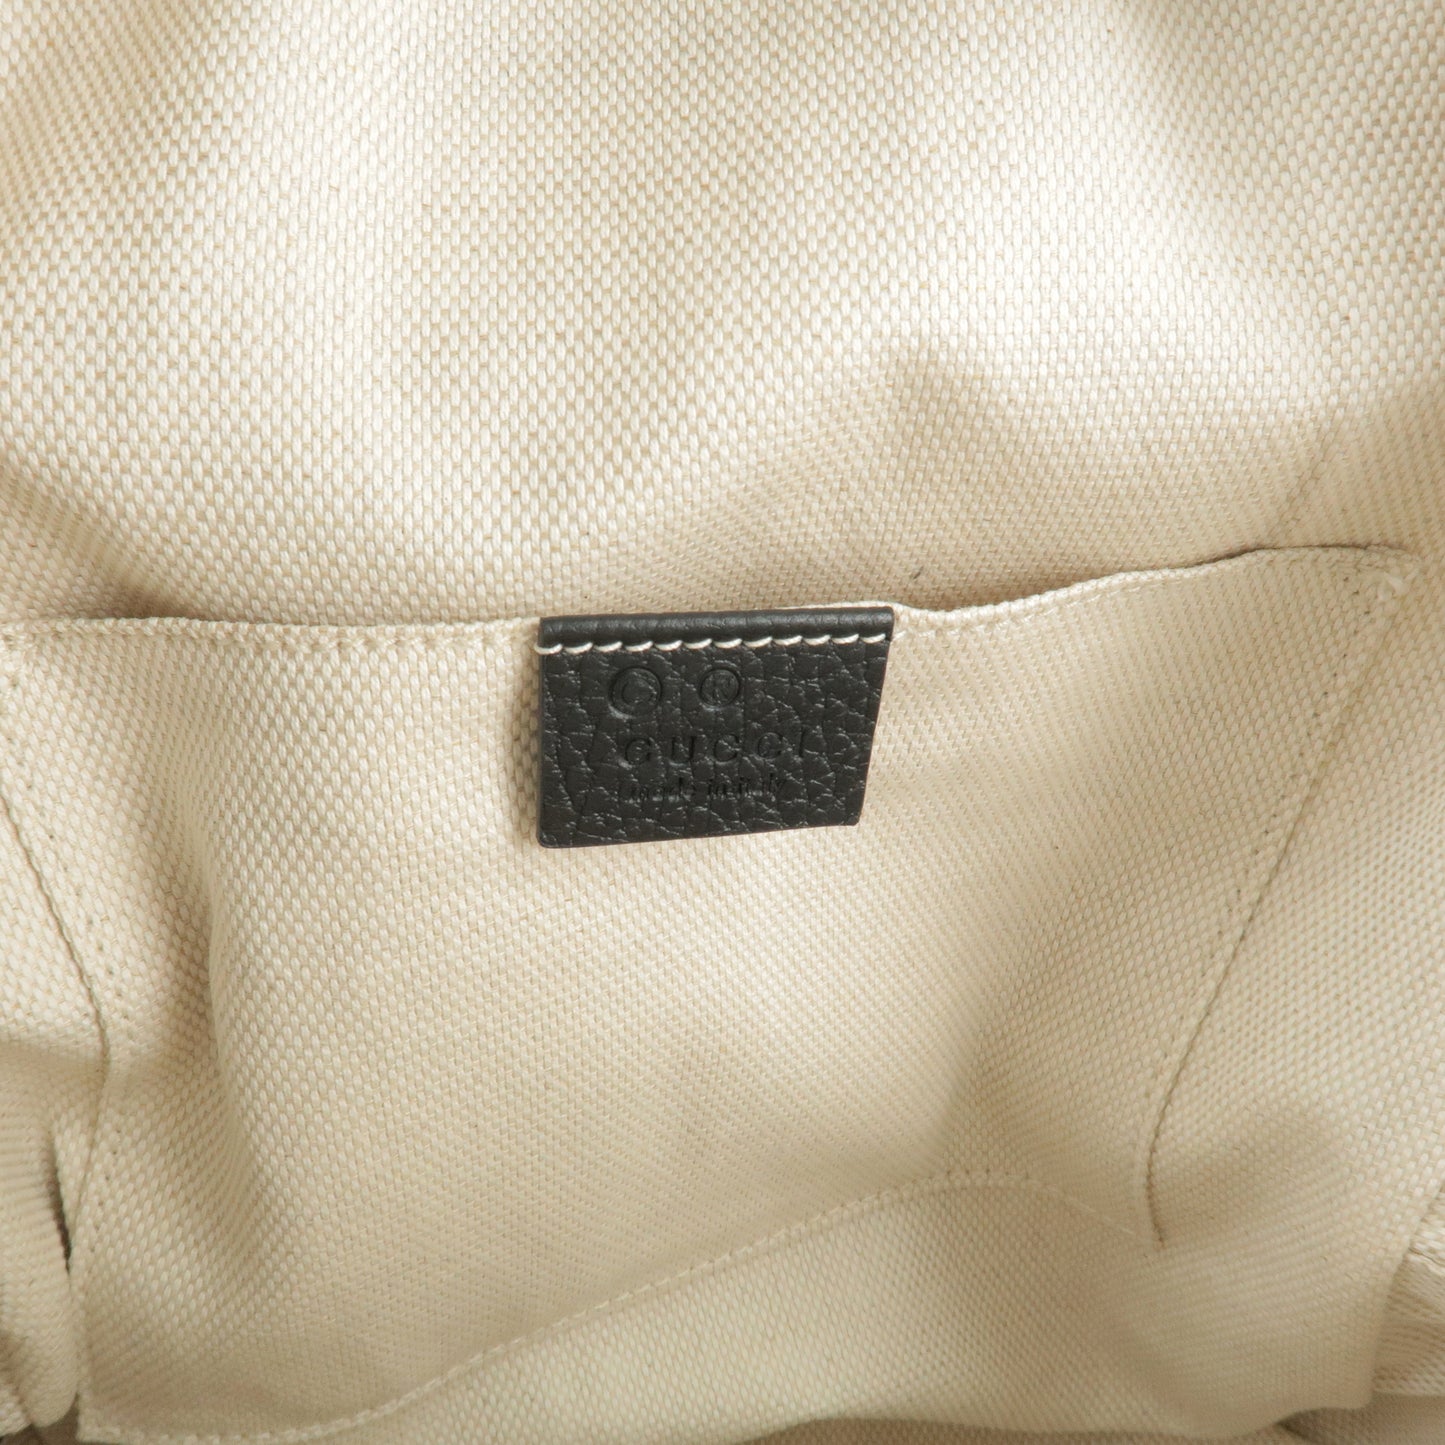 GUCCI SOHO Interlocking Leather Ruck Sack Back Pack Black 536192